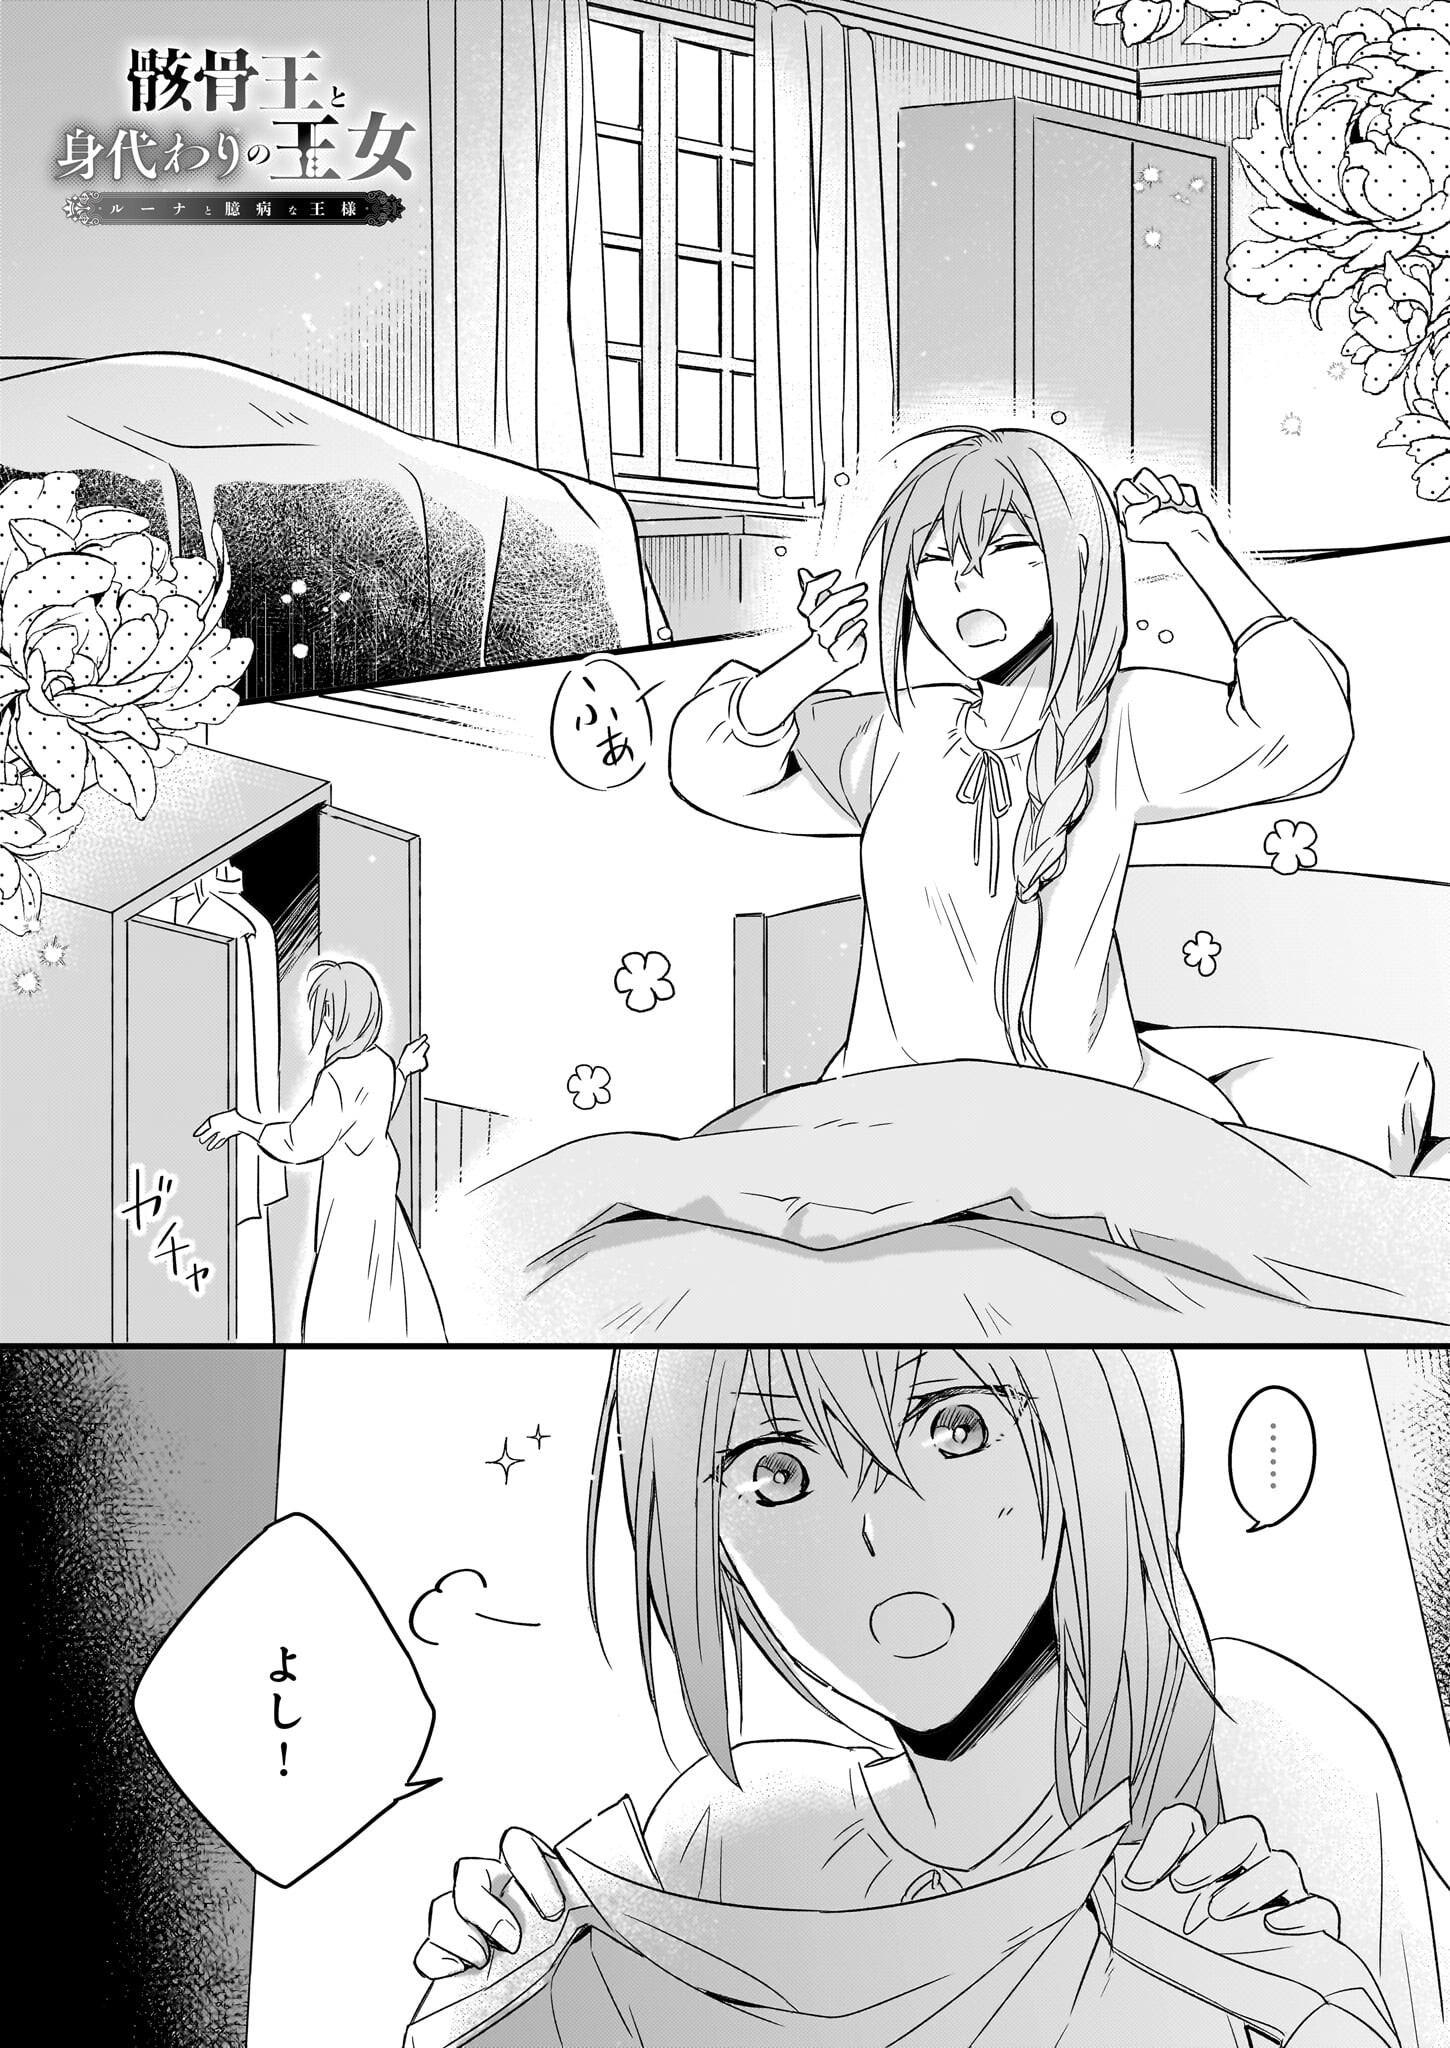 Gaikotsu Ou to Migawari no Oujo – Luna to Okubyou na Ousama - Chapter 4 - Page 1